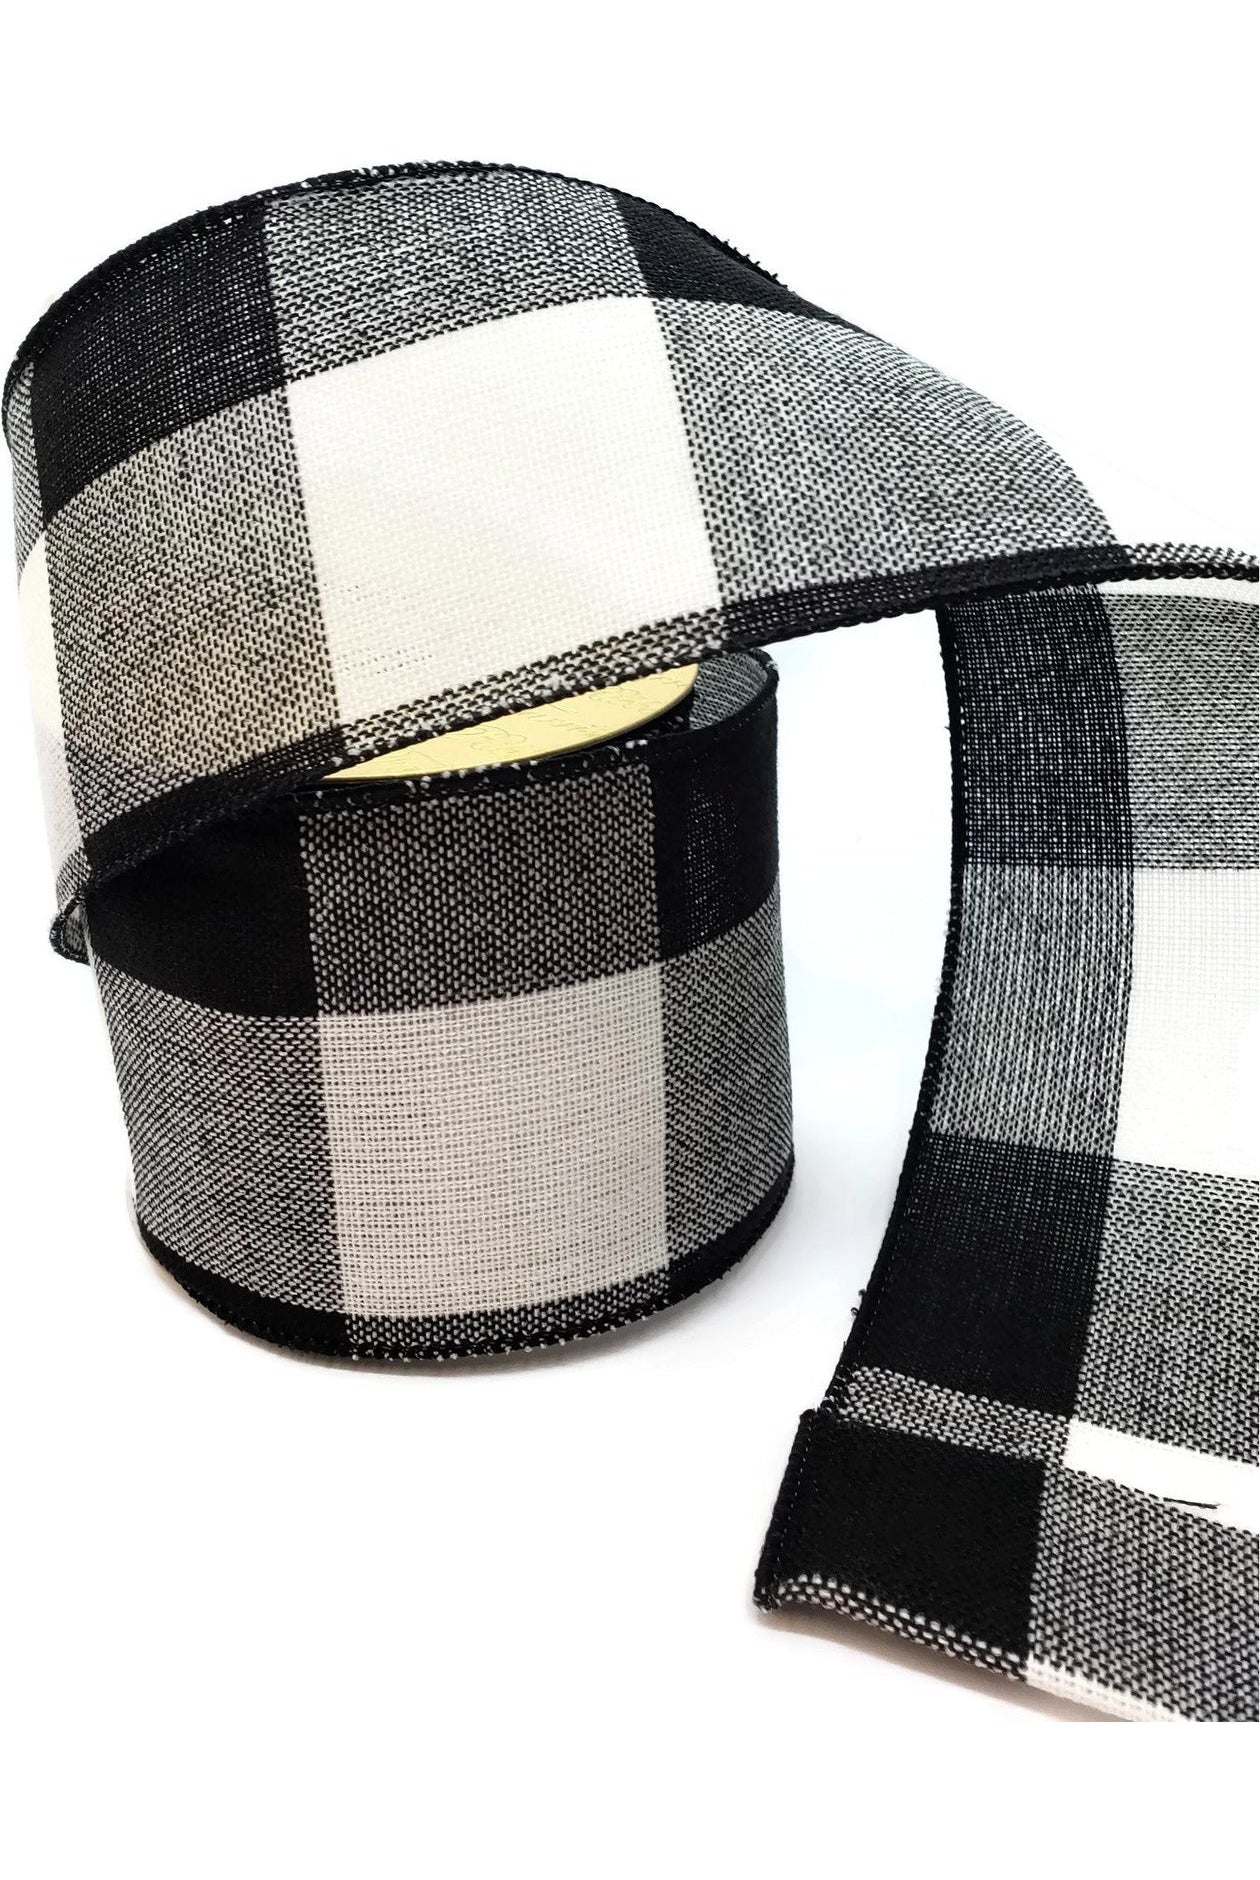 Shop For 4" Linen Checks Ribbon: Black & White (10 Yards) RD855-92